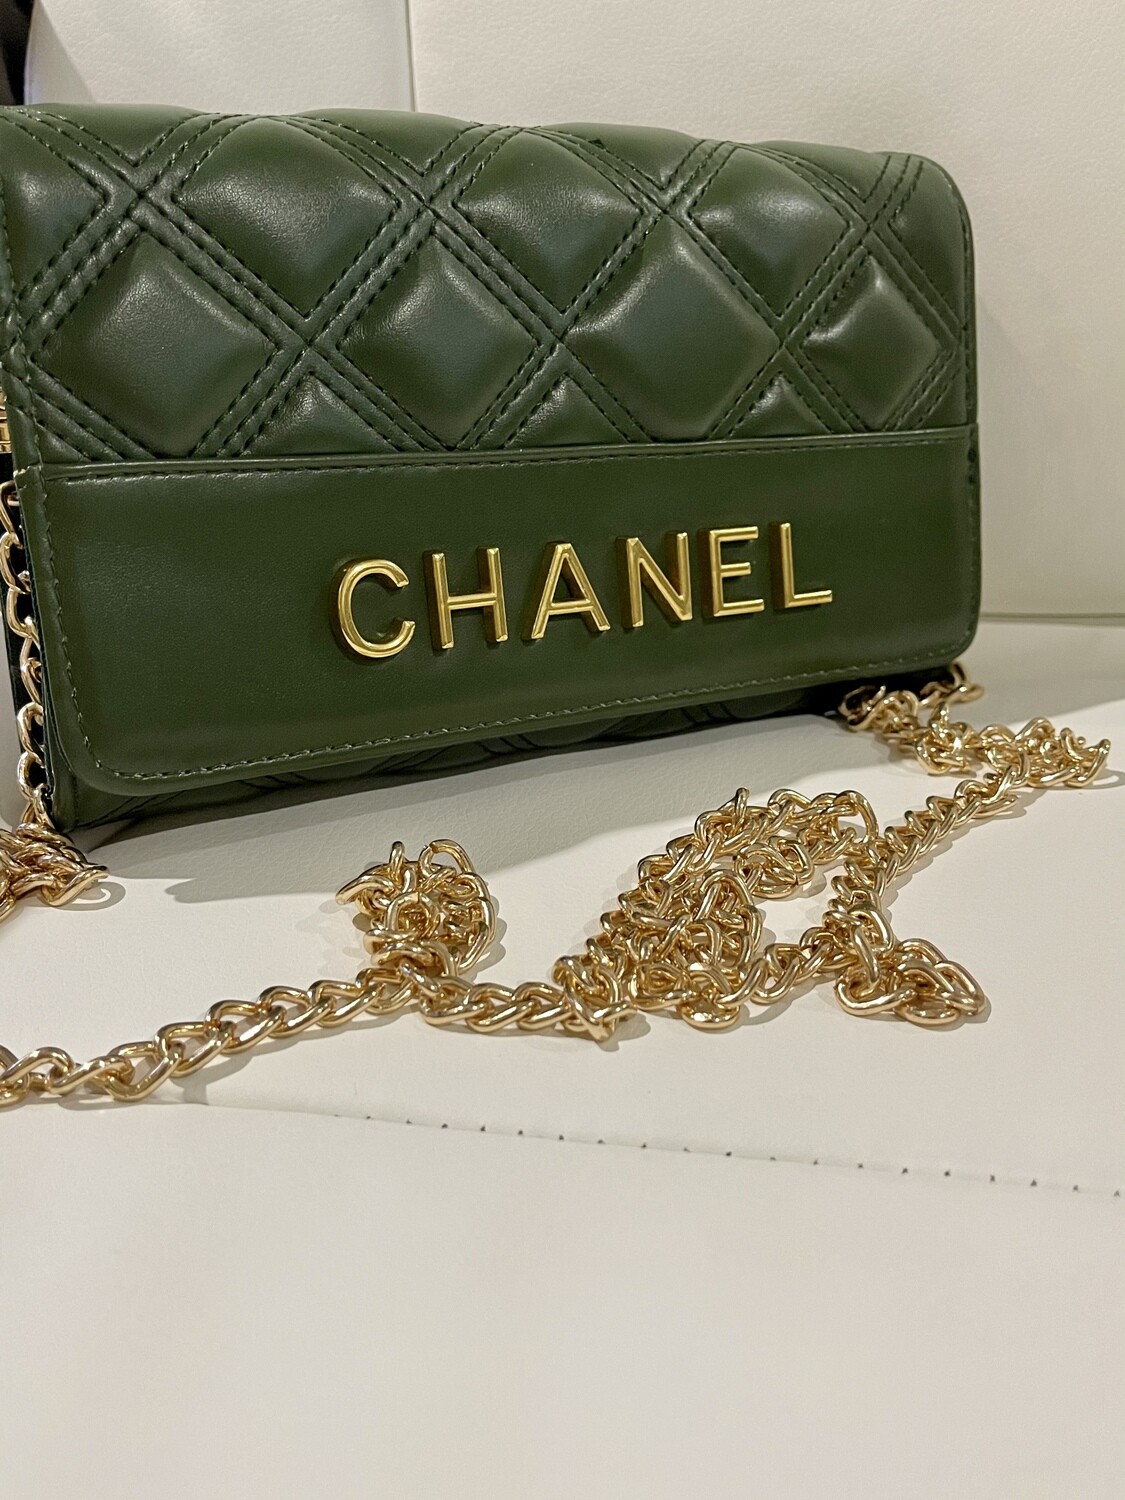 Chanel Date night